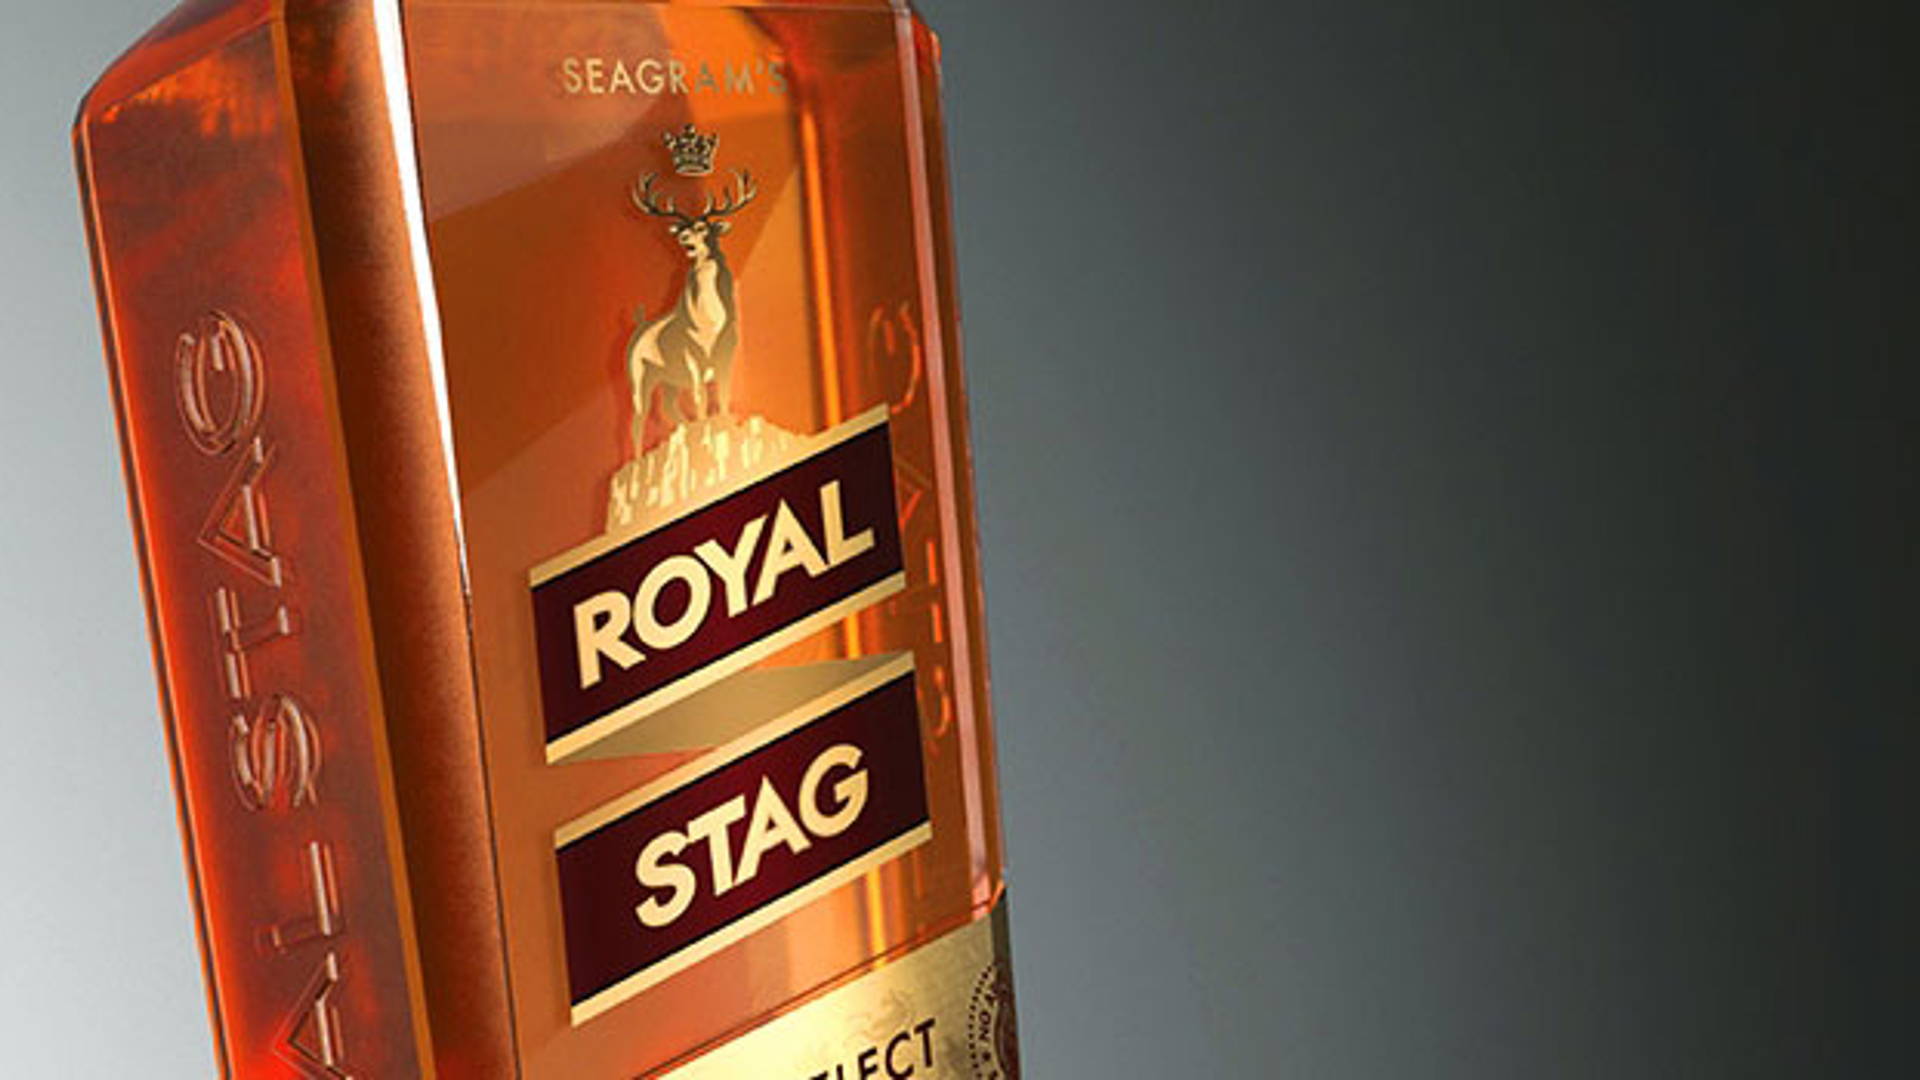 Royal Stag Barrel Select. Dieline, Branding & Packaging Inspiration